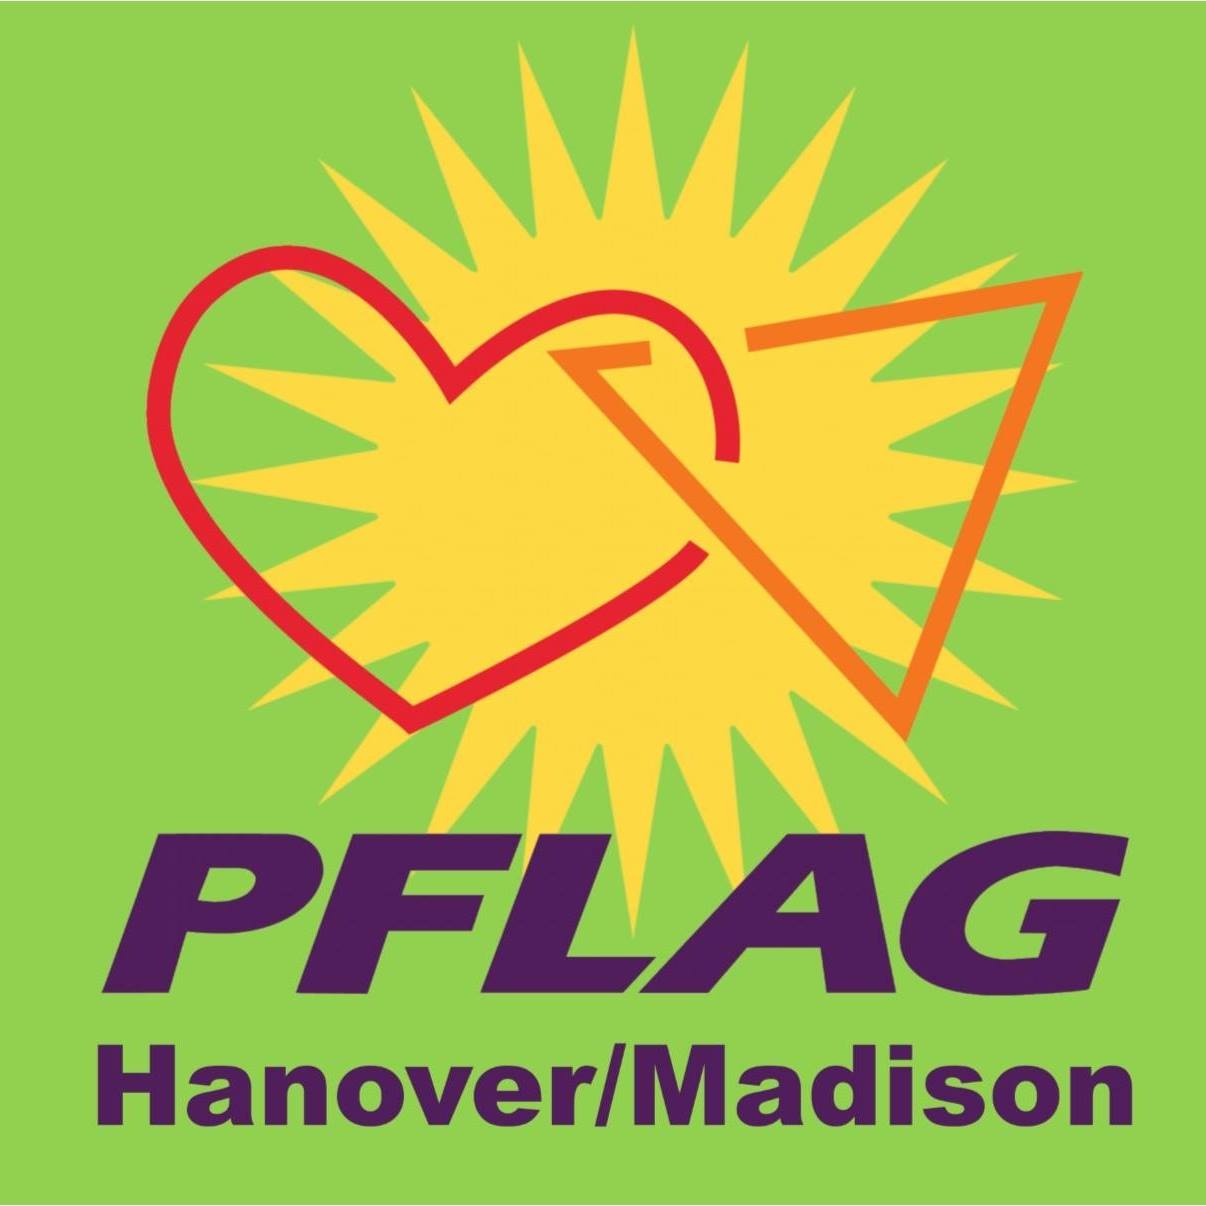 LGBTQ Organizations in Indianapolis Indiana - PFLAG Hanover - Madison